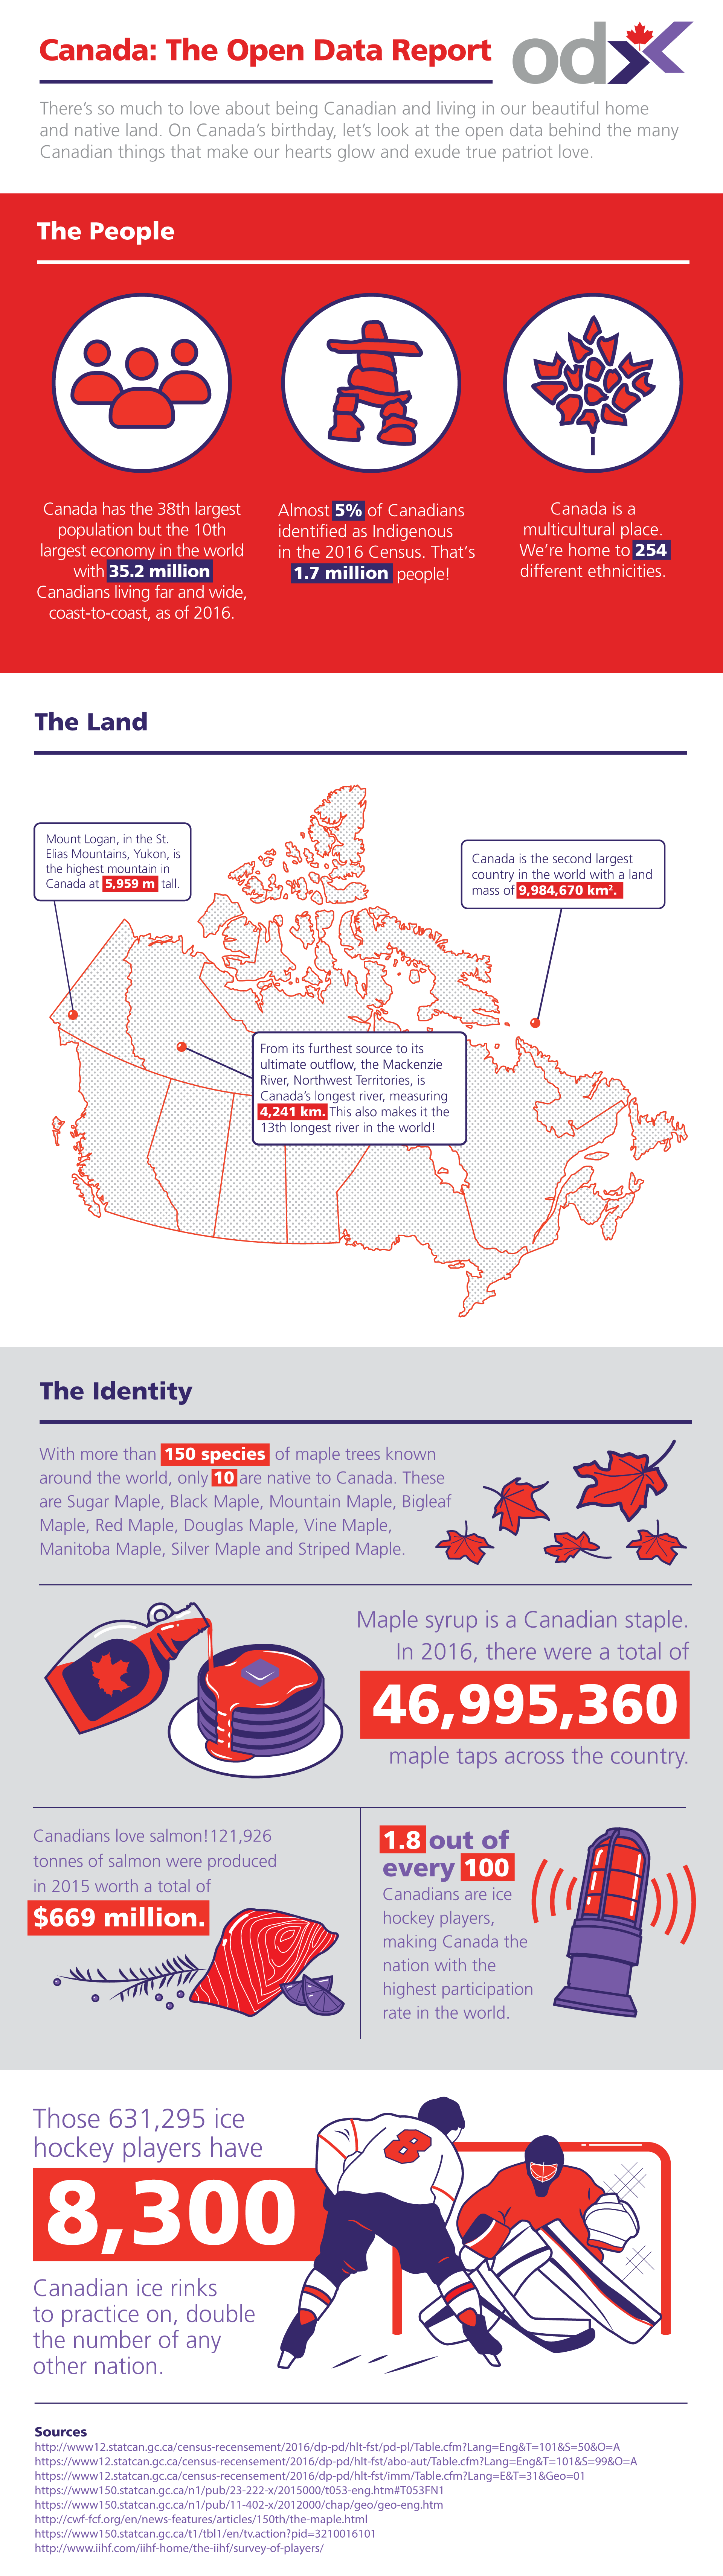 ODX Canada Open Data Report Infographic